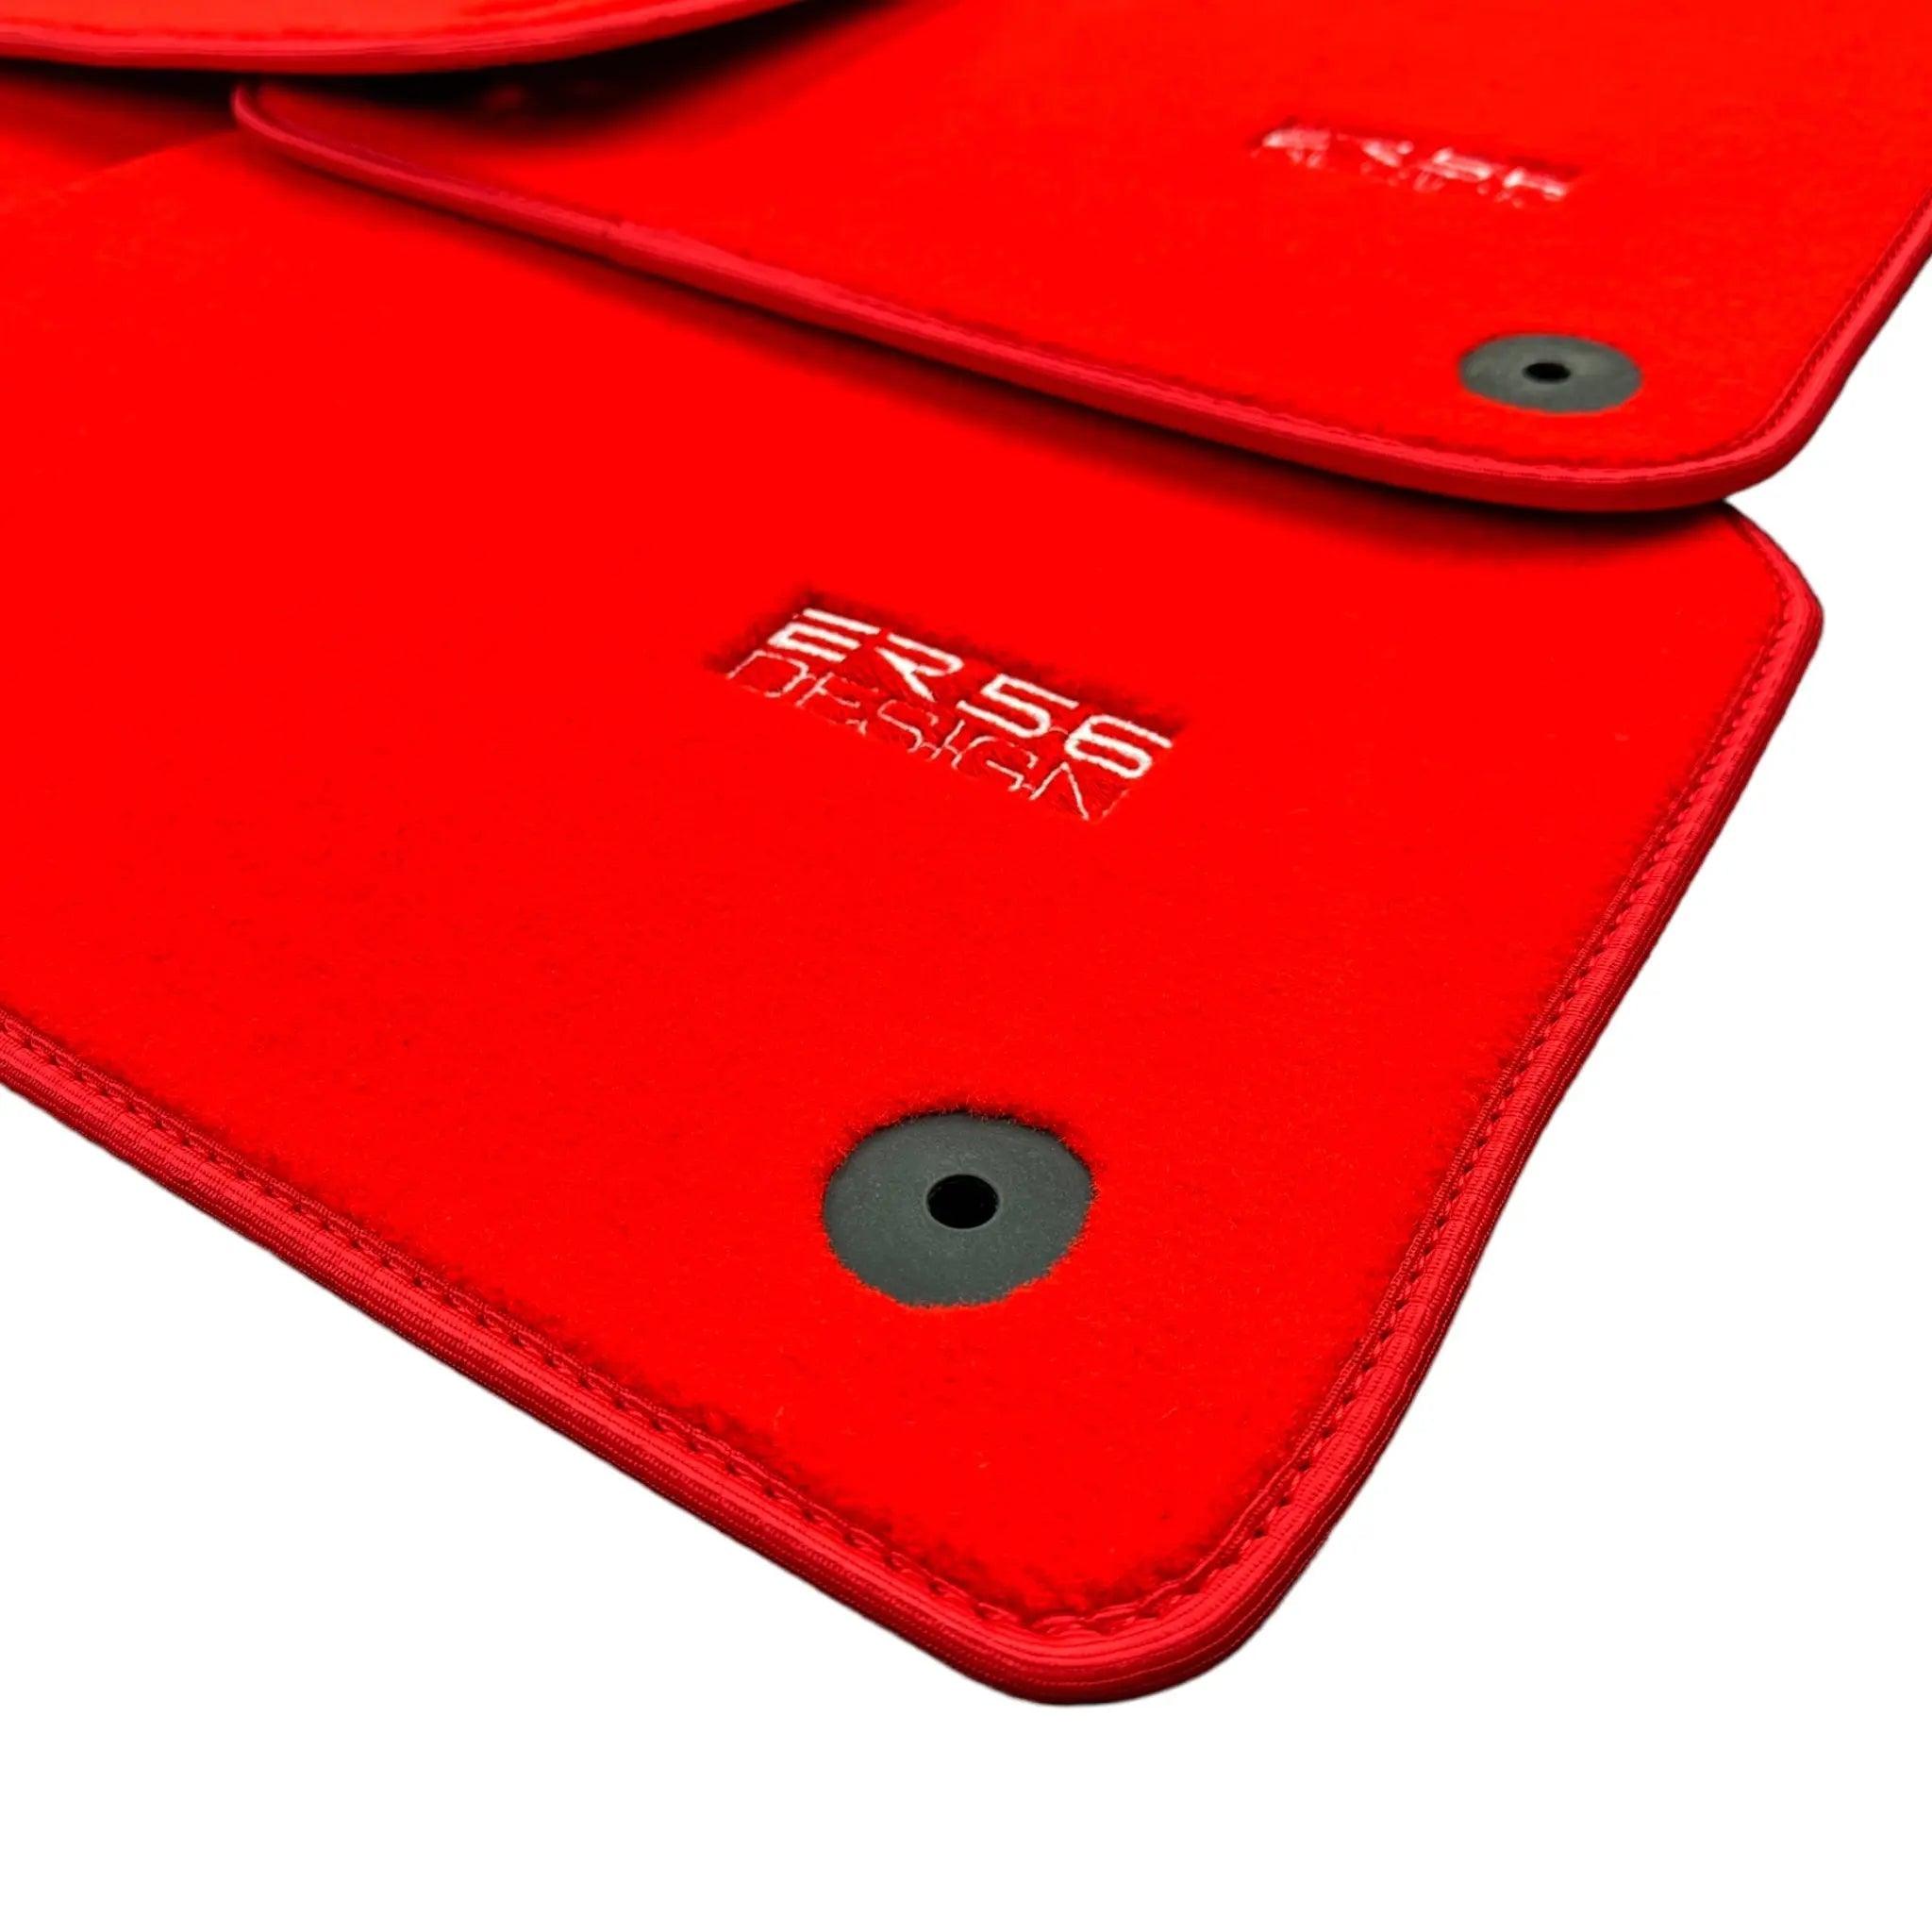 Red Floor Mats for Audi Q7 4M (2019-2023) | ER56 Design